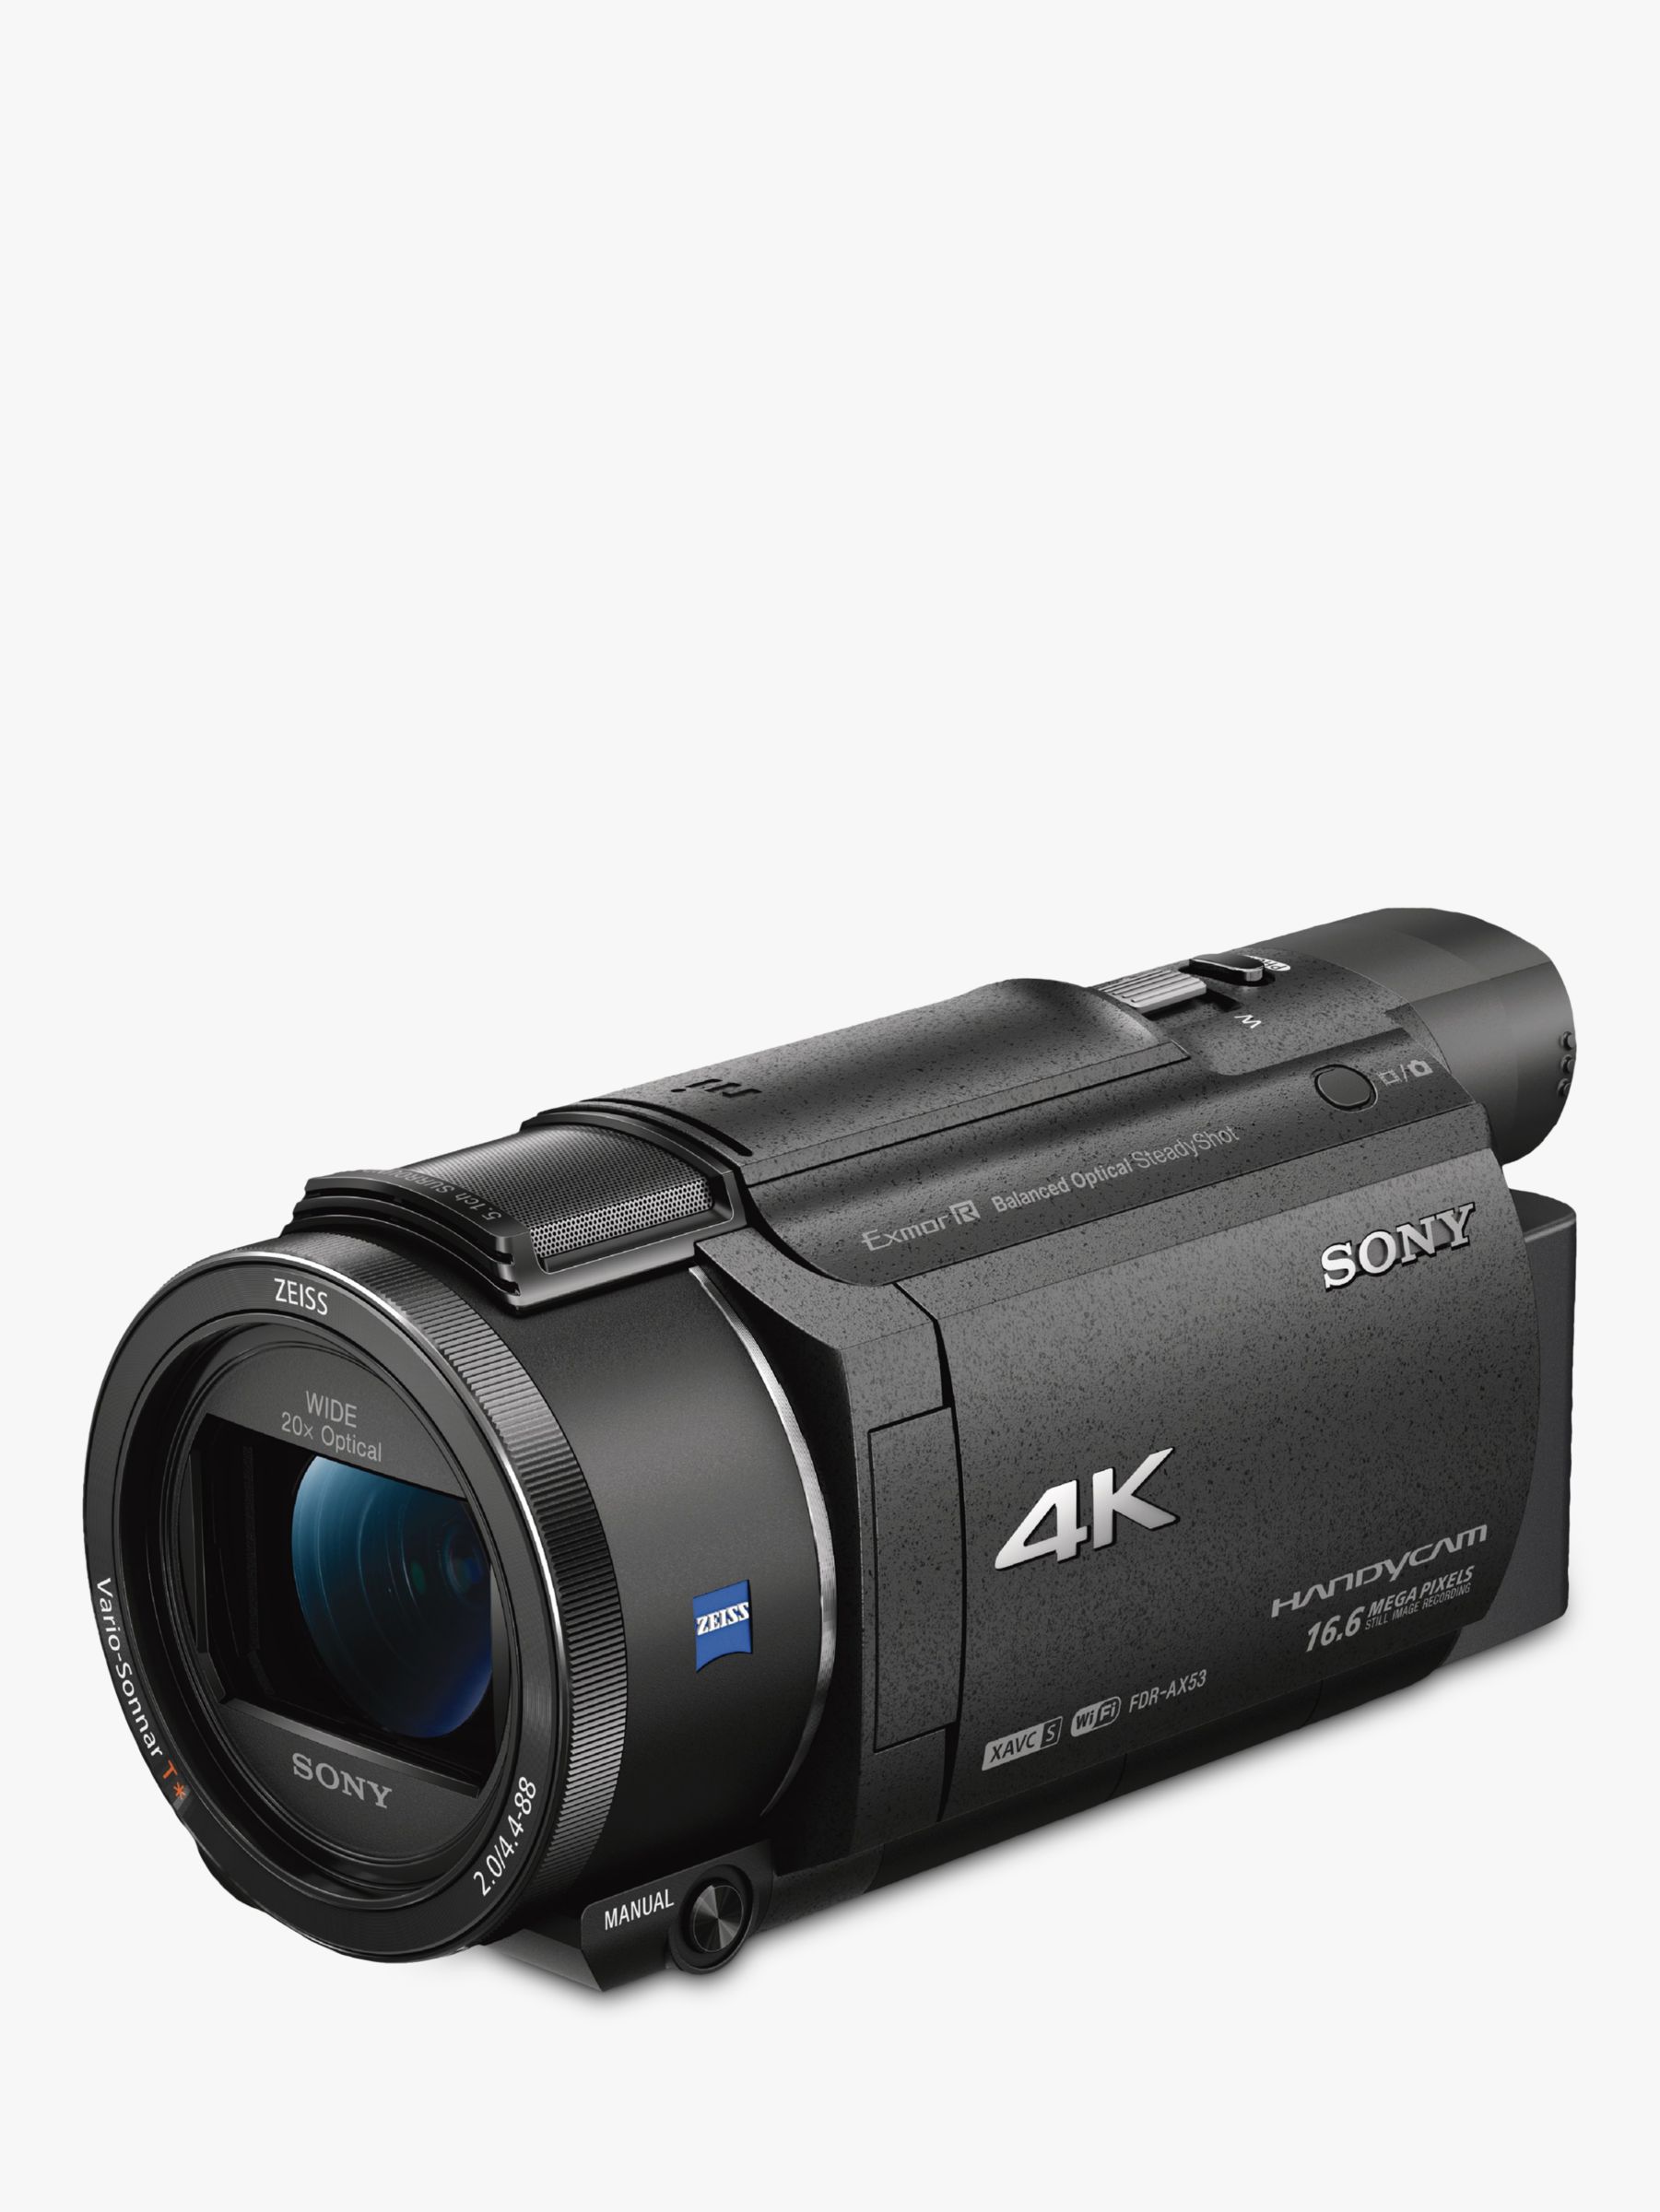 Sony FDR-AX53 Handycam with 4K Ultra-HD, Balanced Optical SteadyShot, 8.29MP, 20x Optical Zoom, NFC, Wi-Fi, 3 WhiteMagic LCD Screen, Black